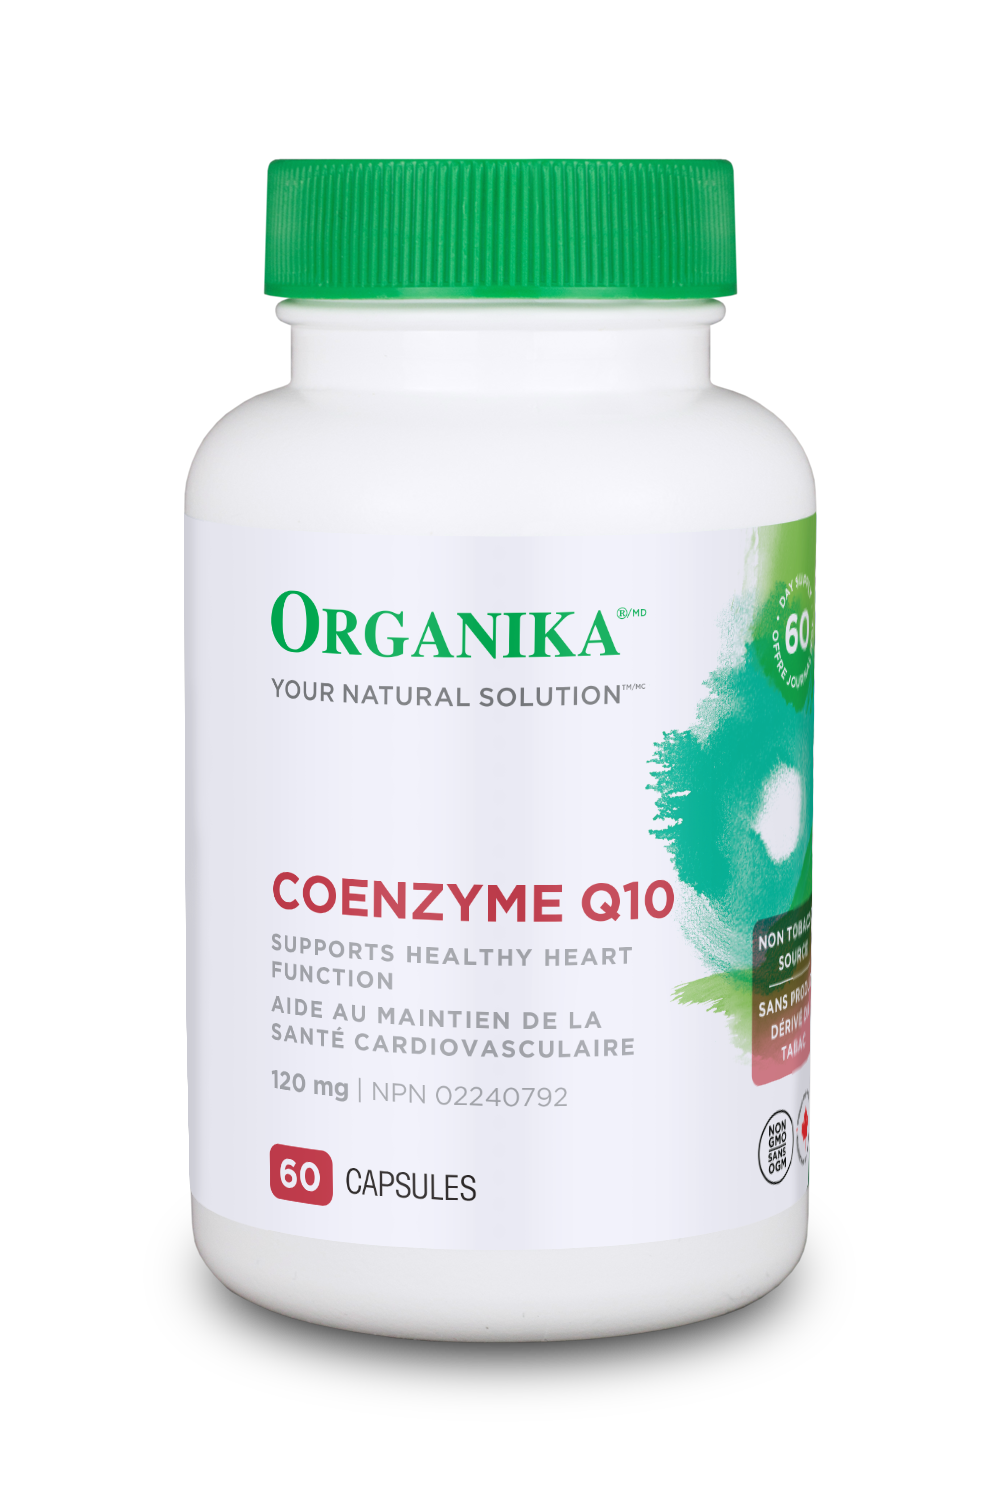 Organika - Coenzyme Q10 (120 caps)